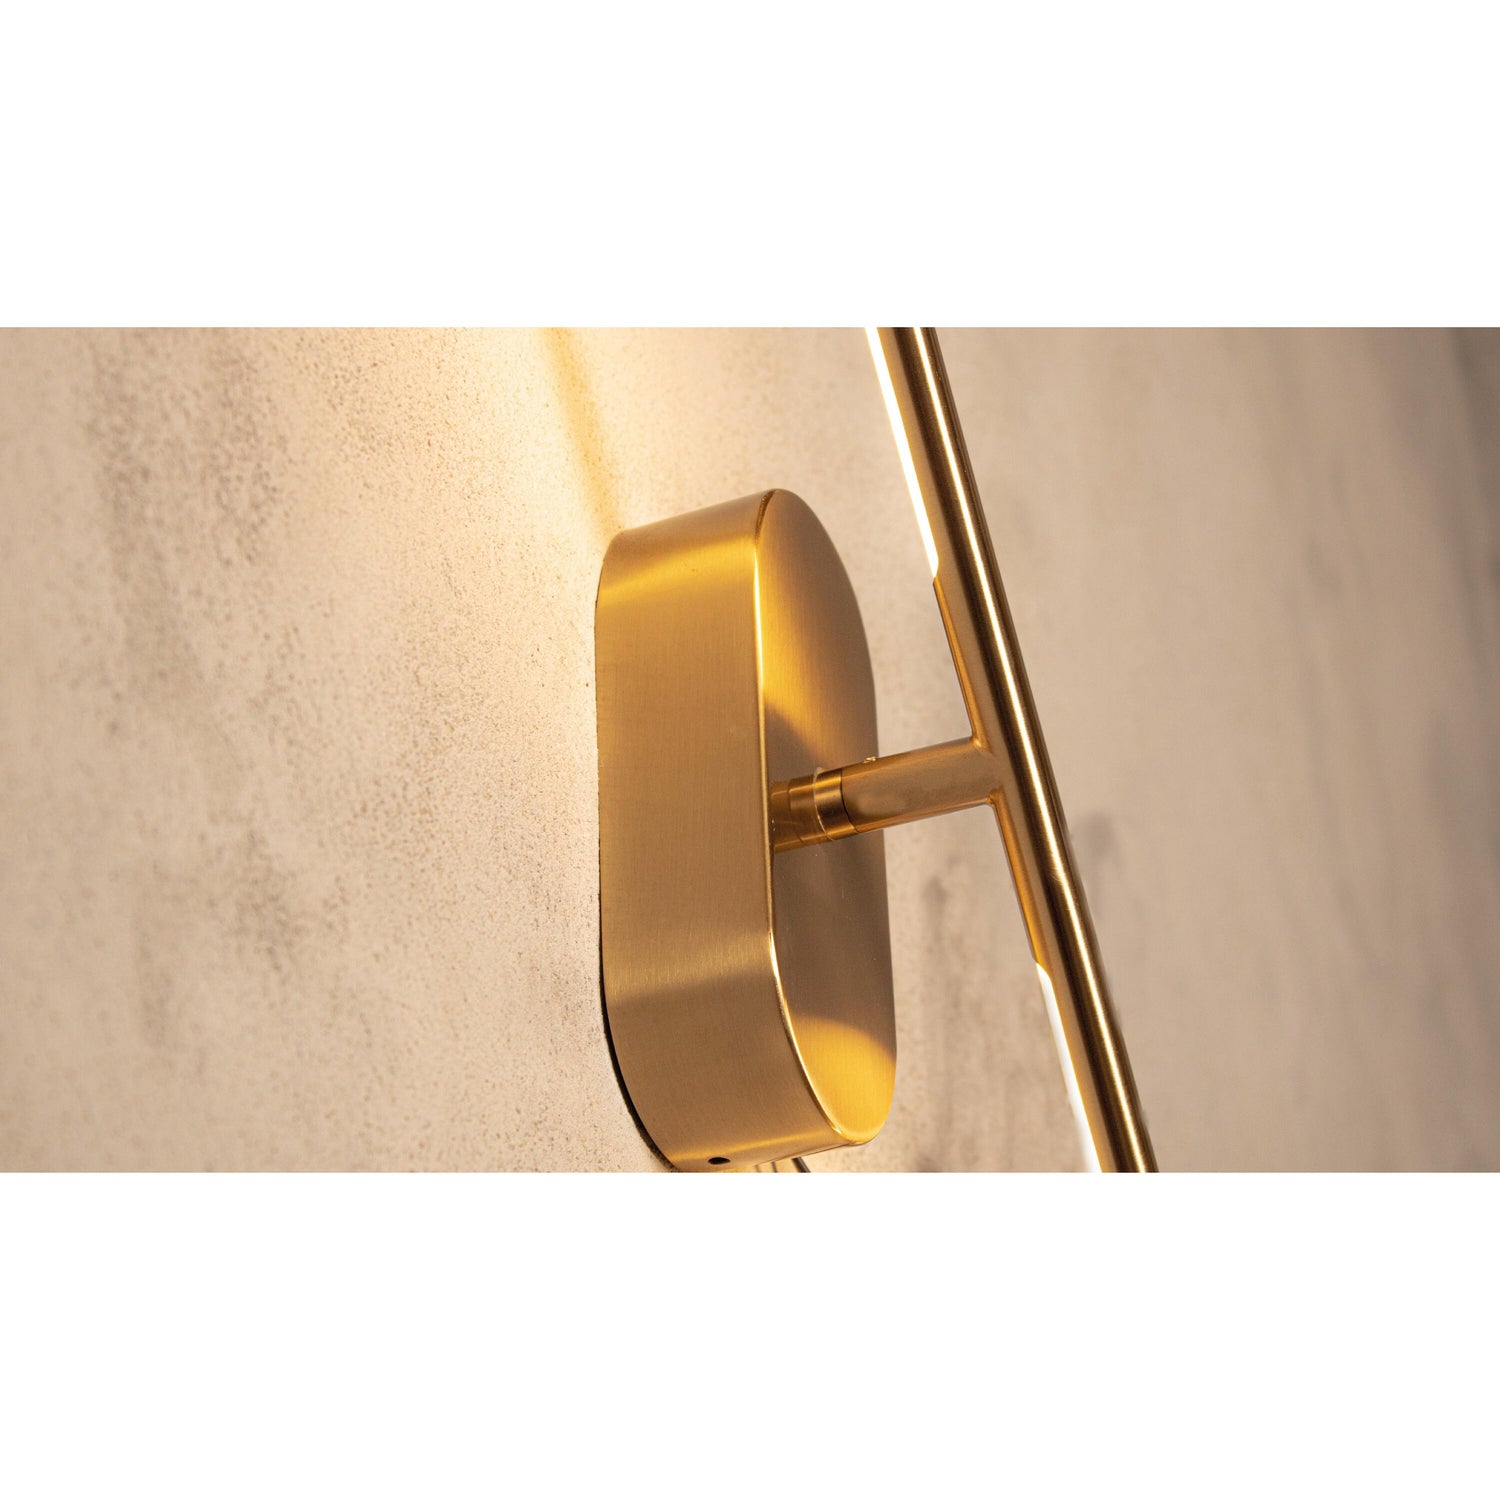 Brass Rotatable Rod Wall Lamp, Modern Handmade Chrome Sconce Wall Light, Housewarming Gift LED Lighting MODEL : ASSOS